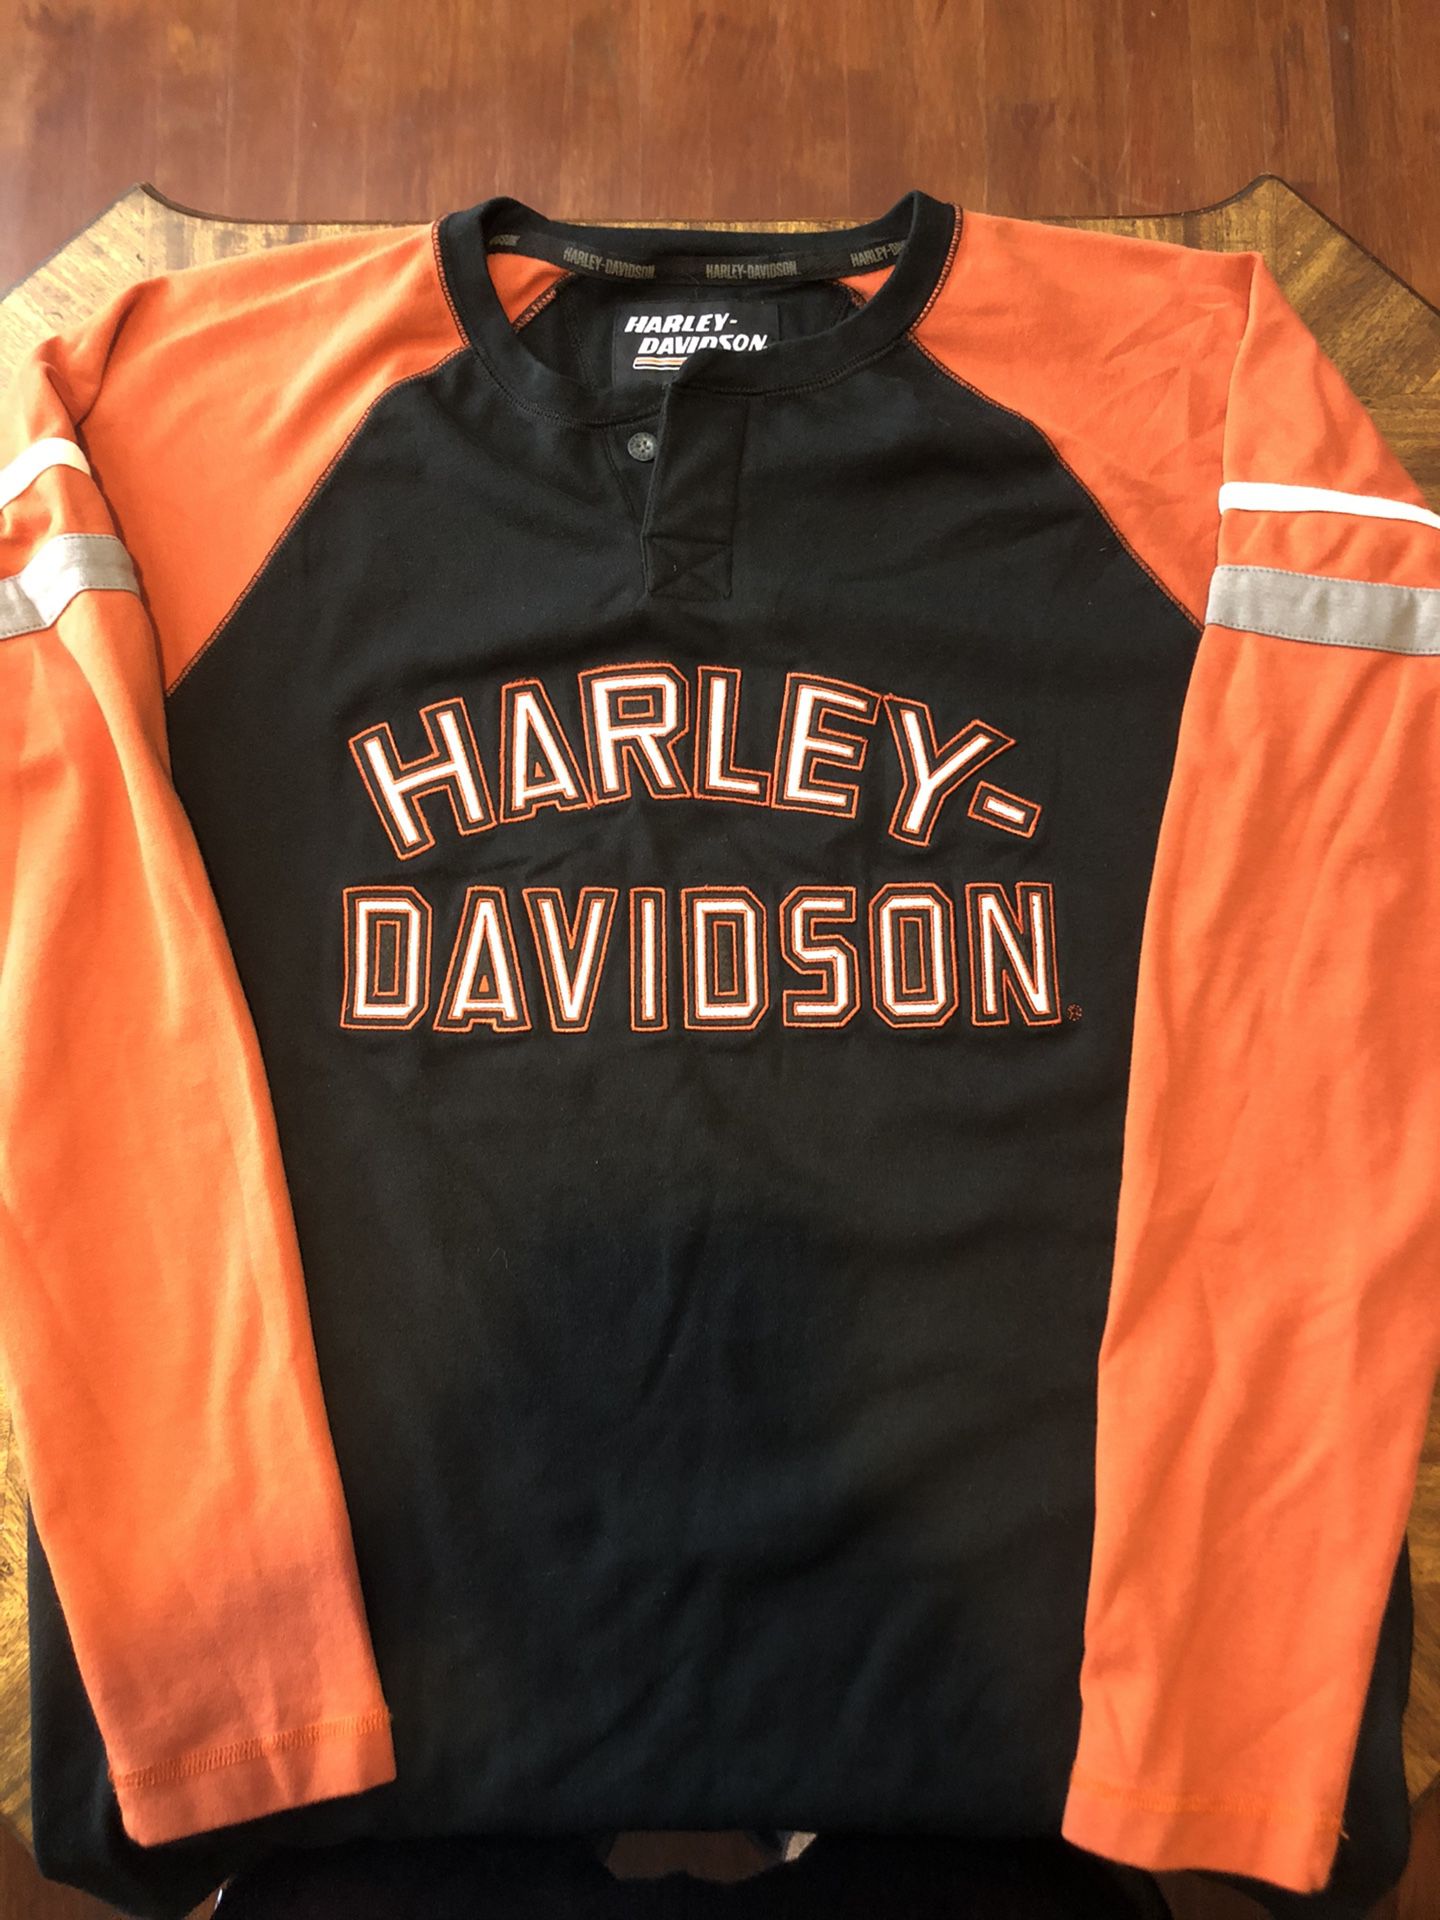 Harley Davidson size M